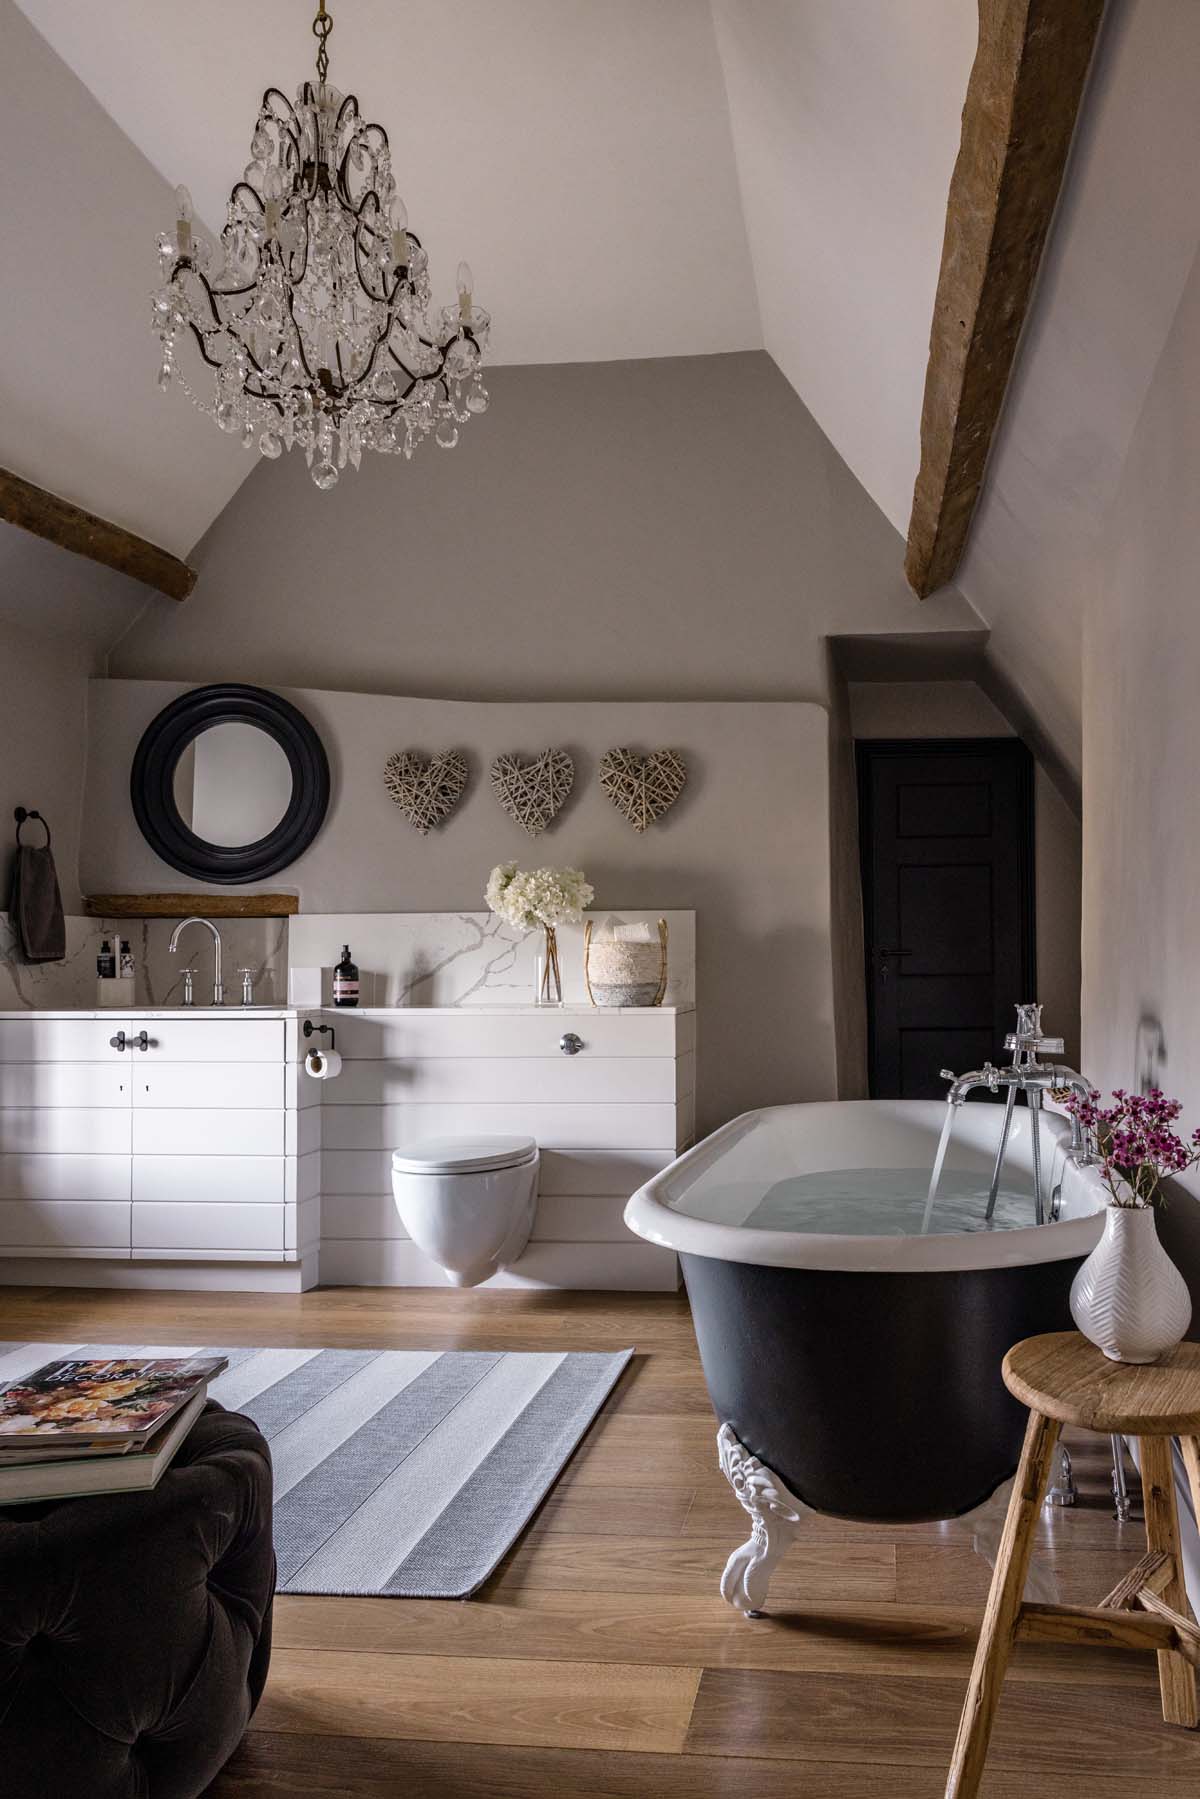 Bathroom with a chandelier and grey rolltop bathtub